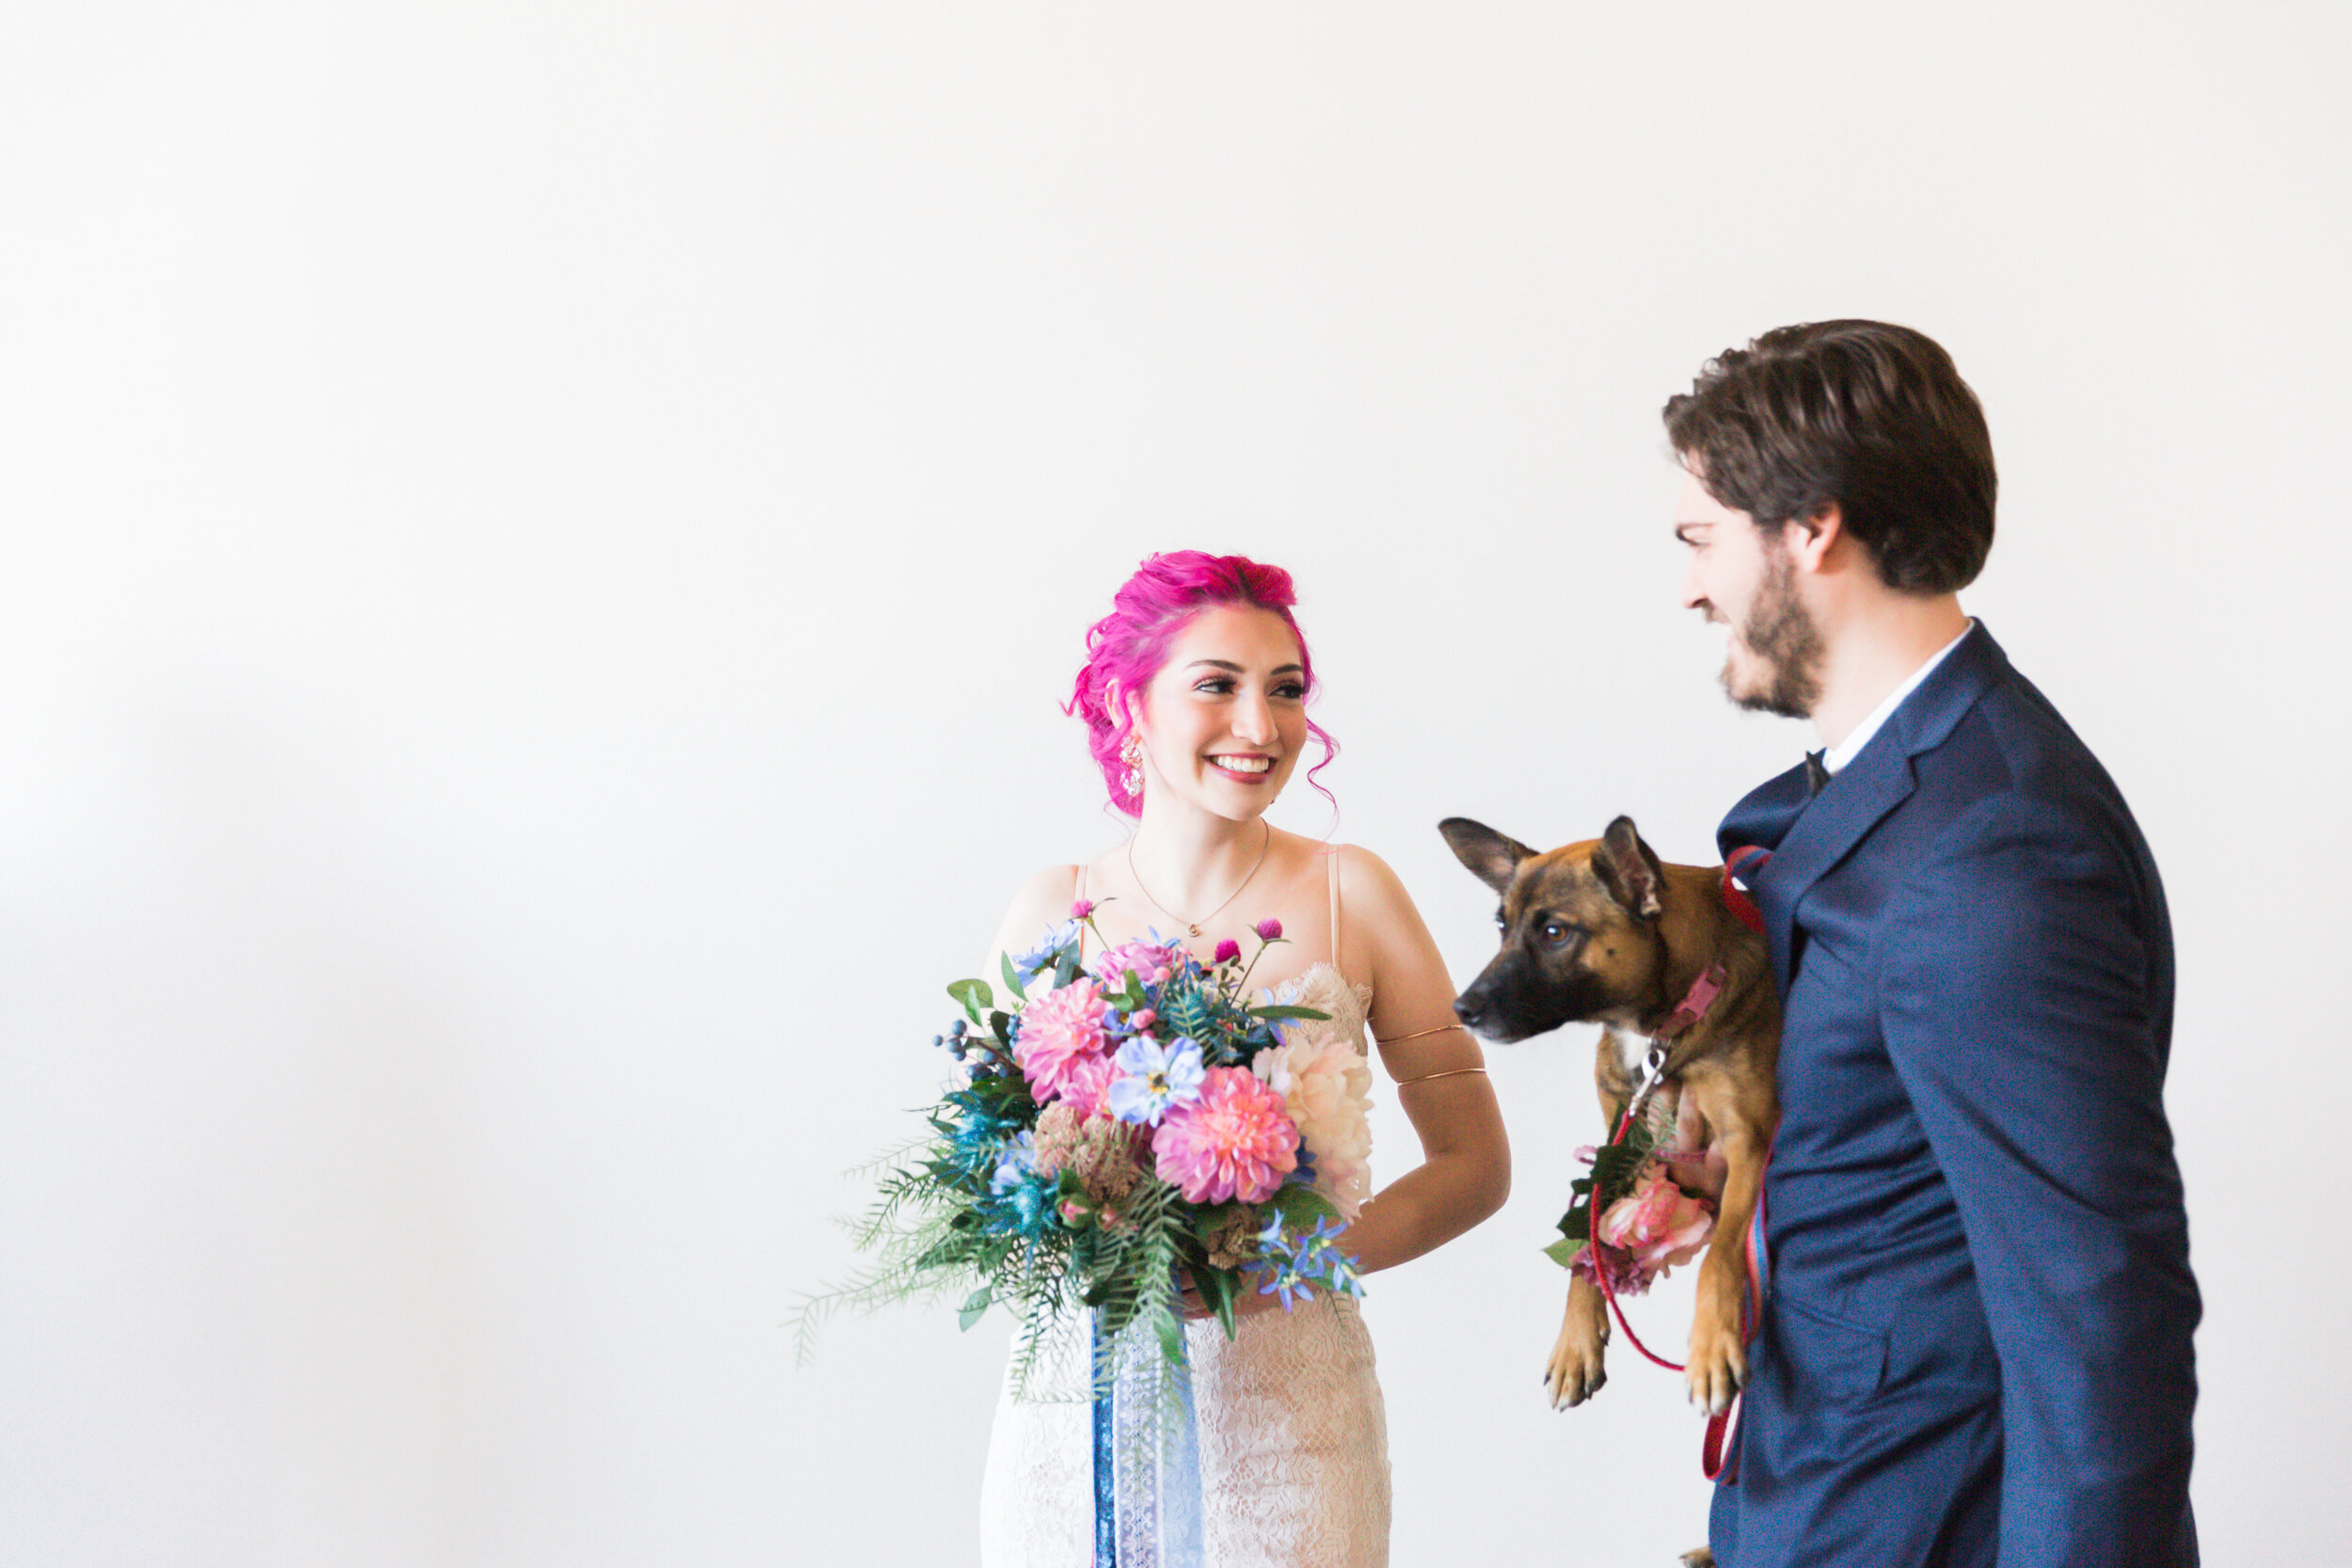 haven street ballroom wedding with puppies best baltimore photographers megapixels media photography-2.jpg